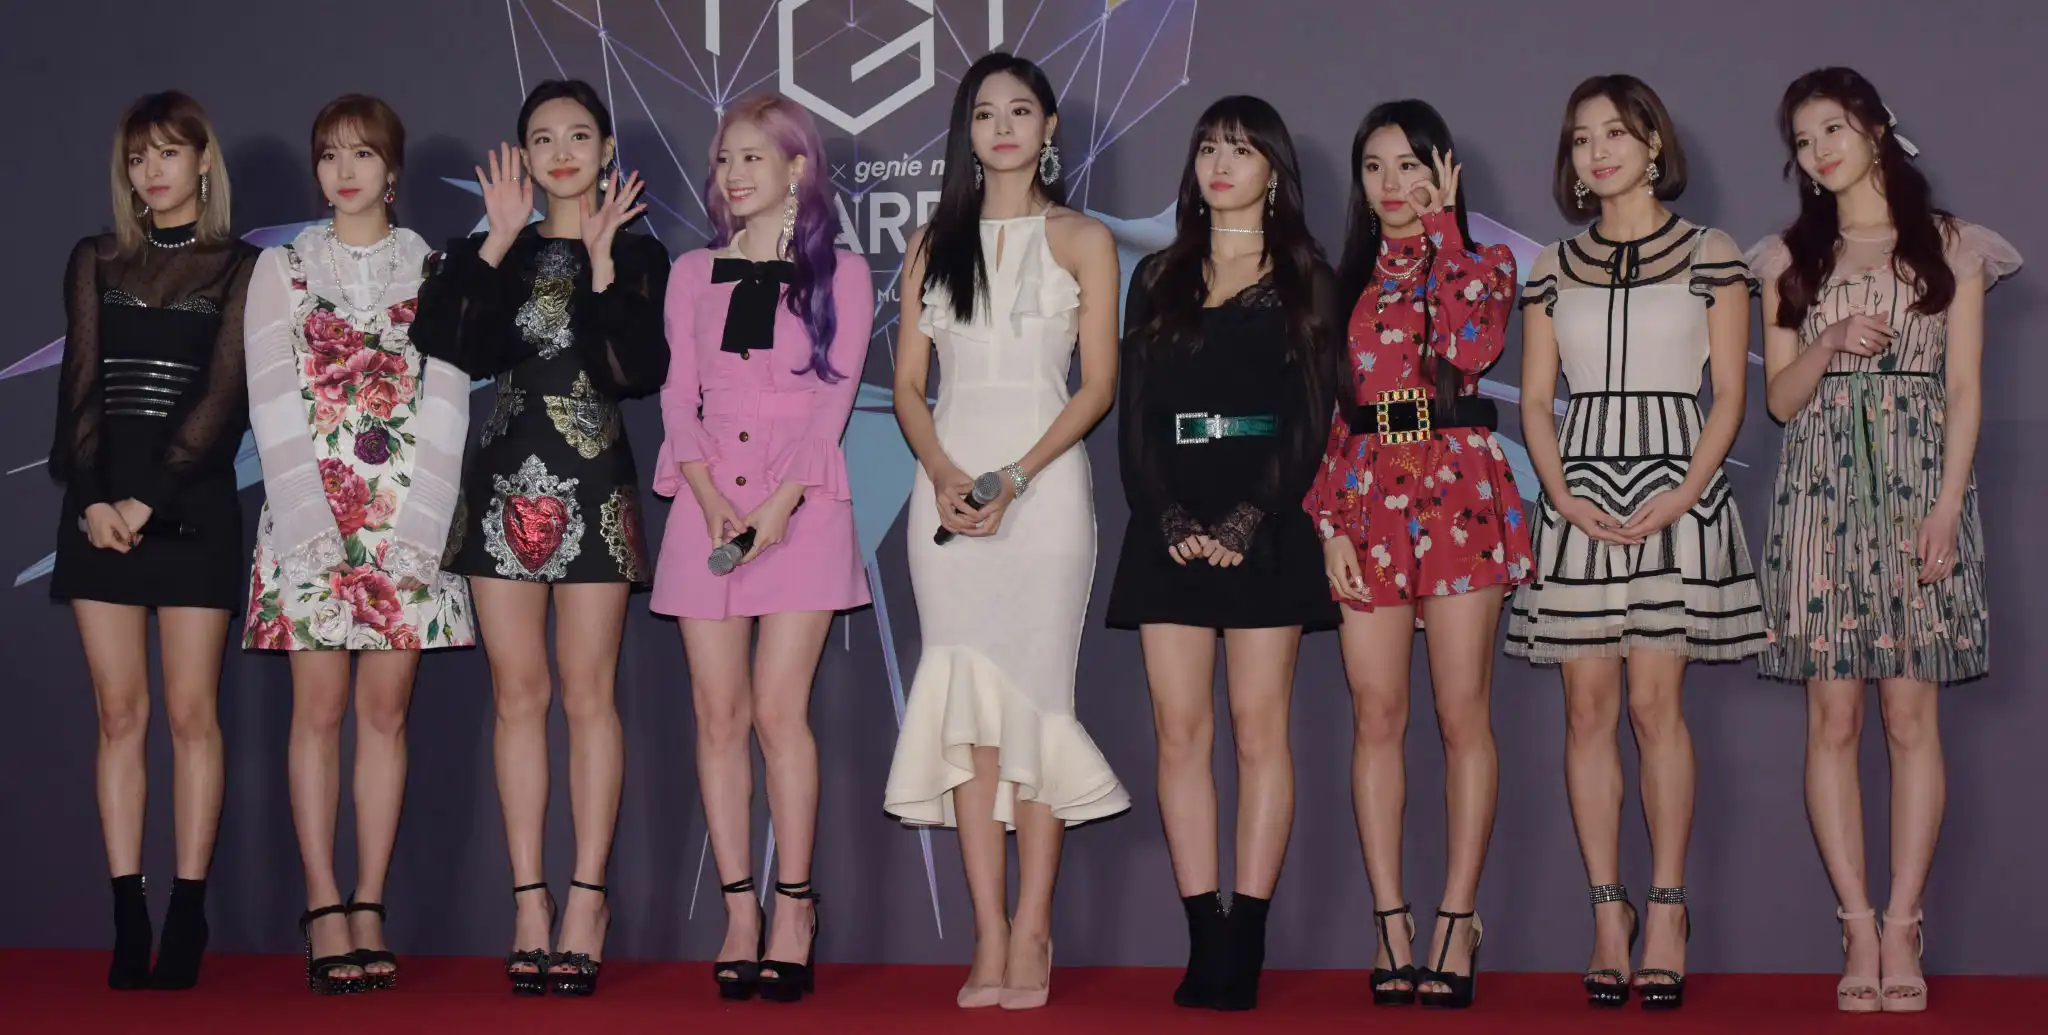 TWICE Members: Nayeon, Jeongyeon, Momo, Sana, Jihyo, Mina, Dahyun, Chaeyoung, and Tzuyu